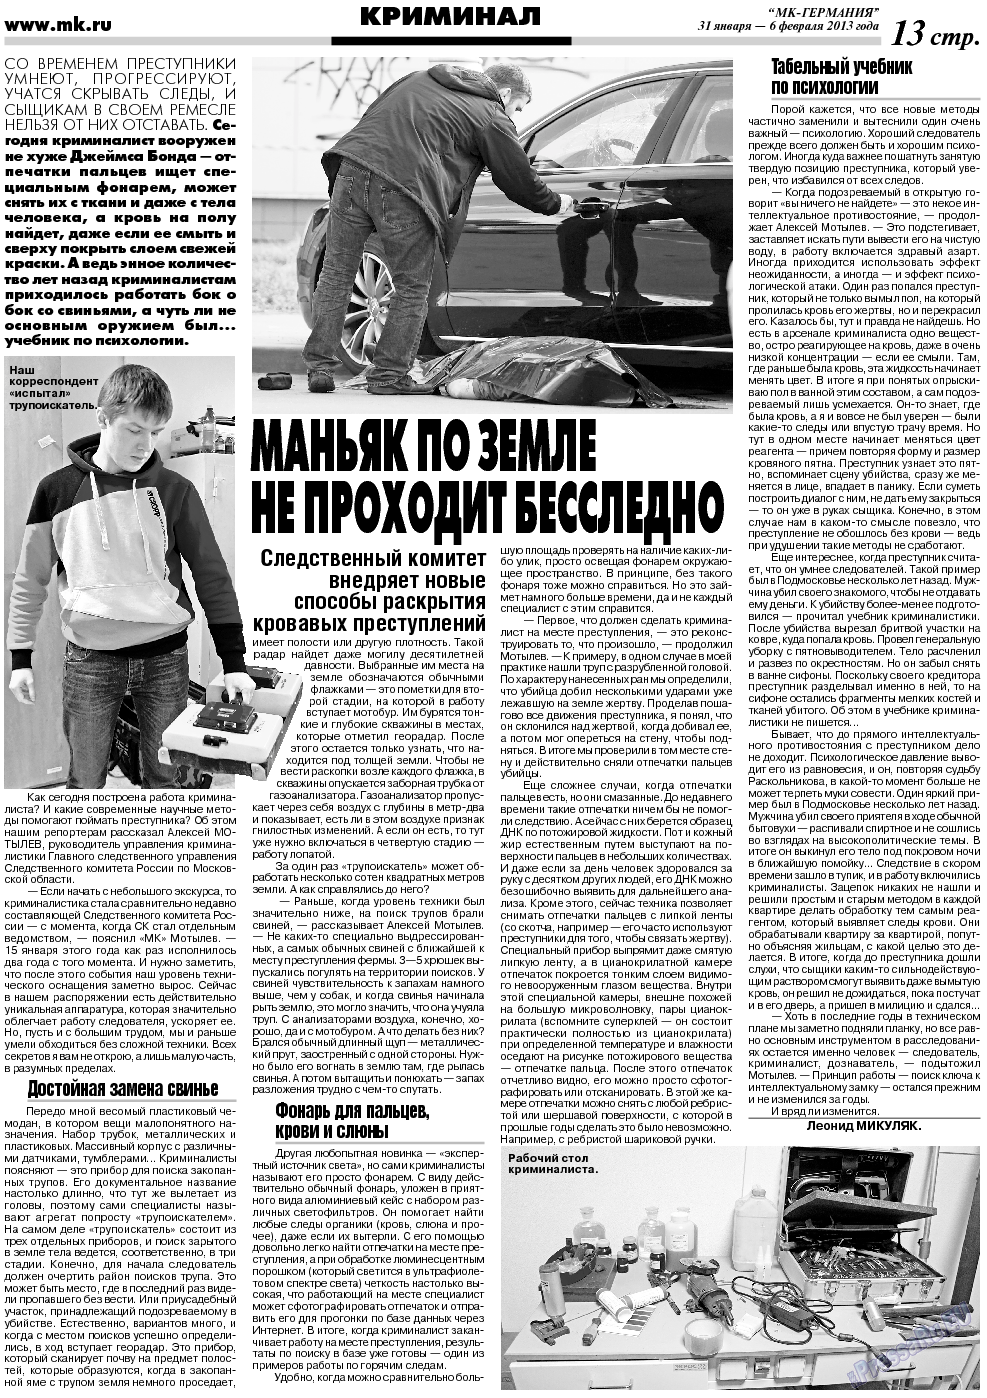 МК-Германия, газета. 2013 №5 стр.13